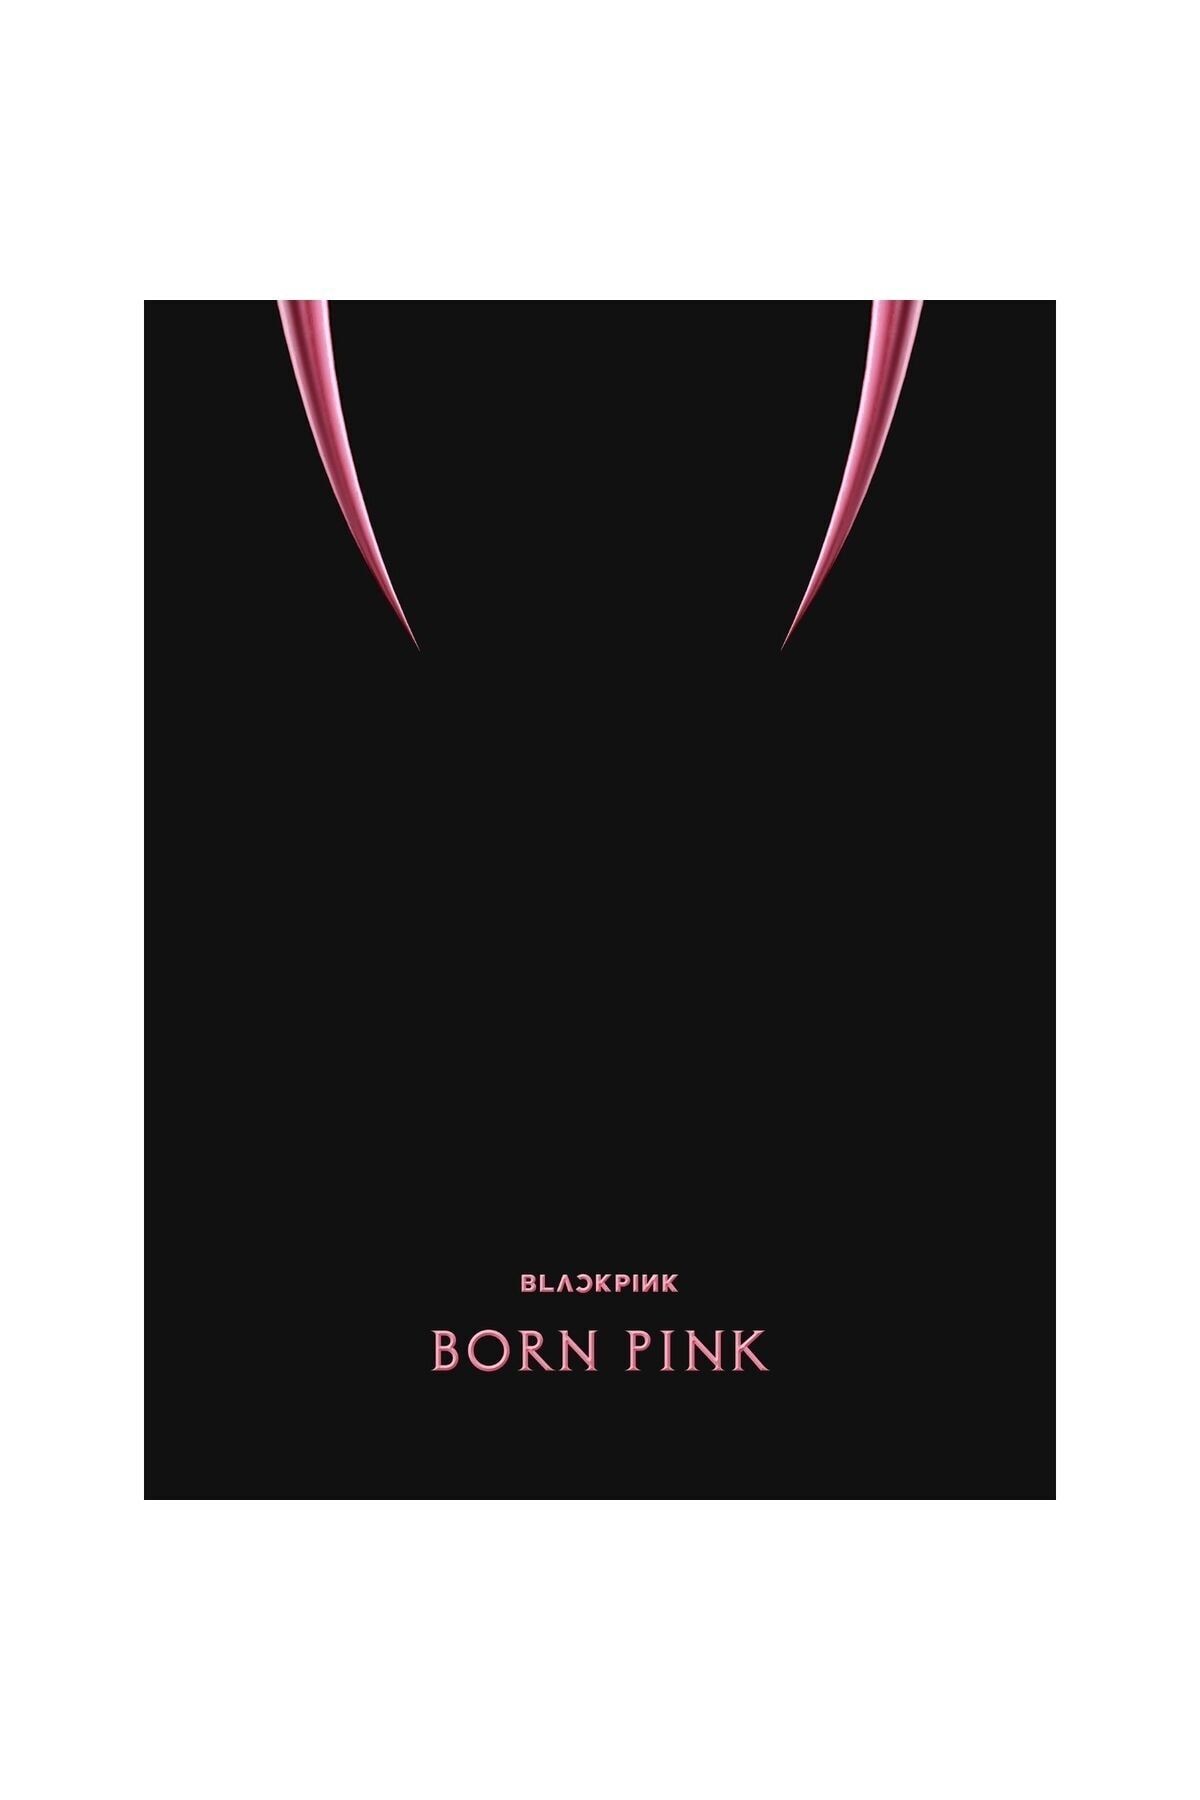 Blackpink - 2nd Album [born Pınk] - Pink Versiyon